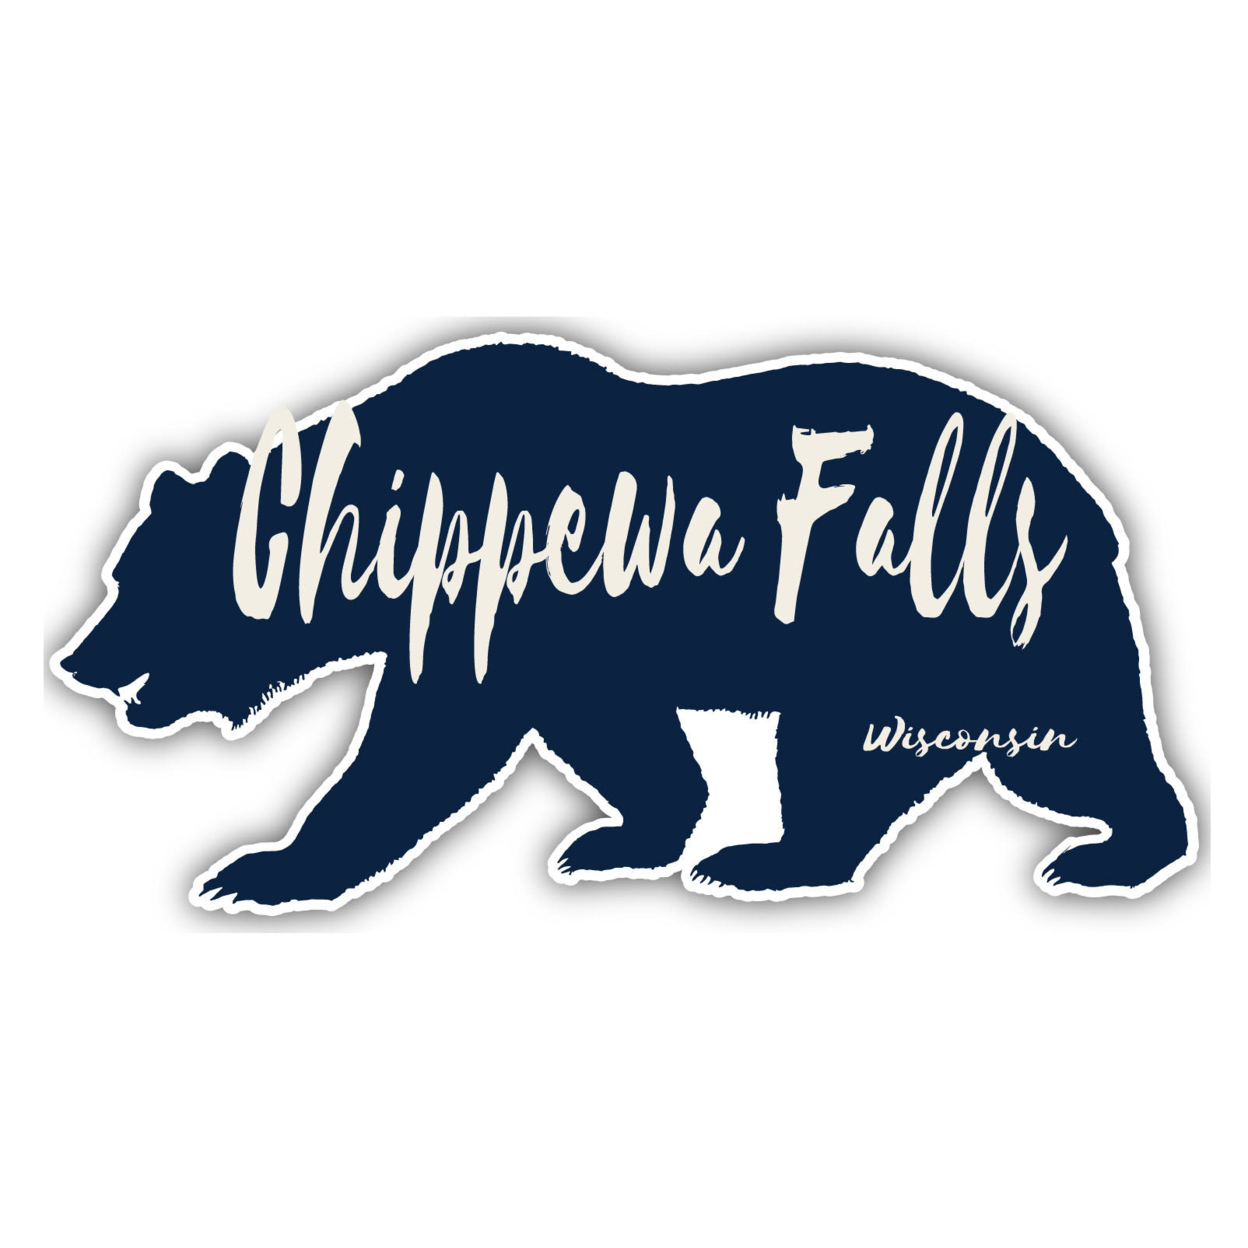 Chippewa Falls Wisconsin Souvenir Decorative Stickers (Choose Theme And Size) - Single Unit, 4-Inch, Bear